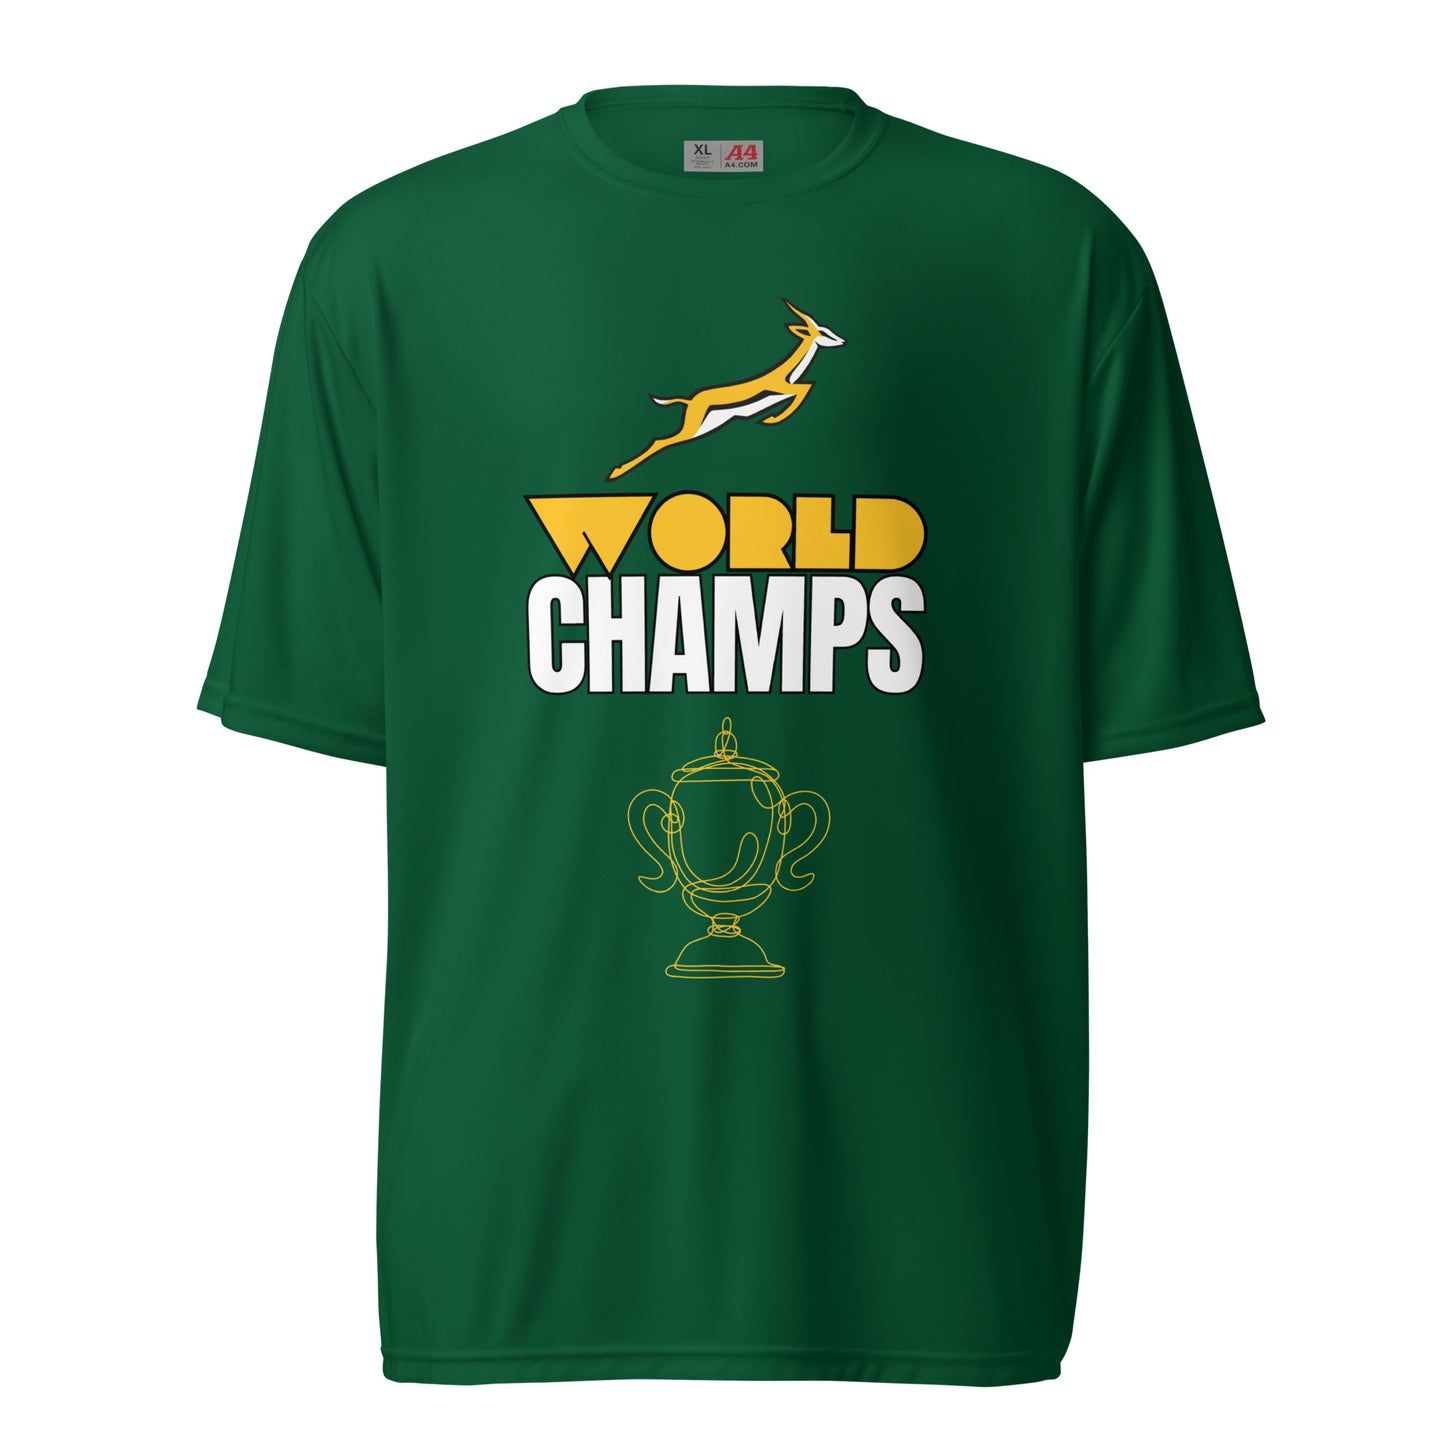 Unisex performance crew neck World Champs Trophy t-shirt